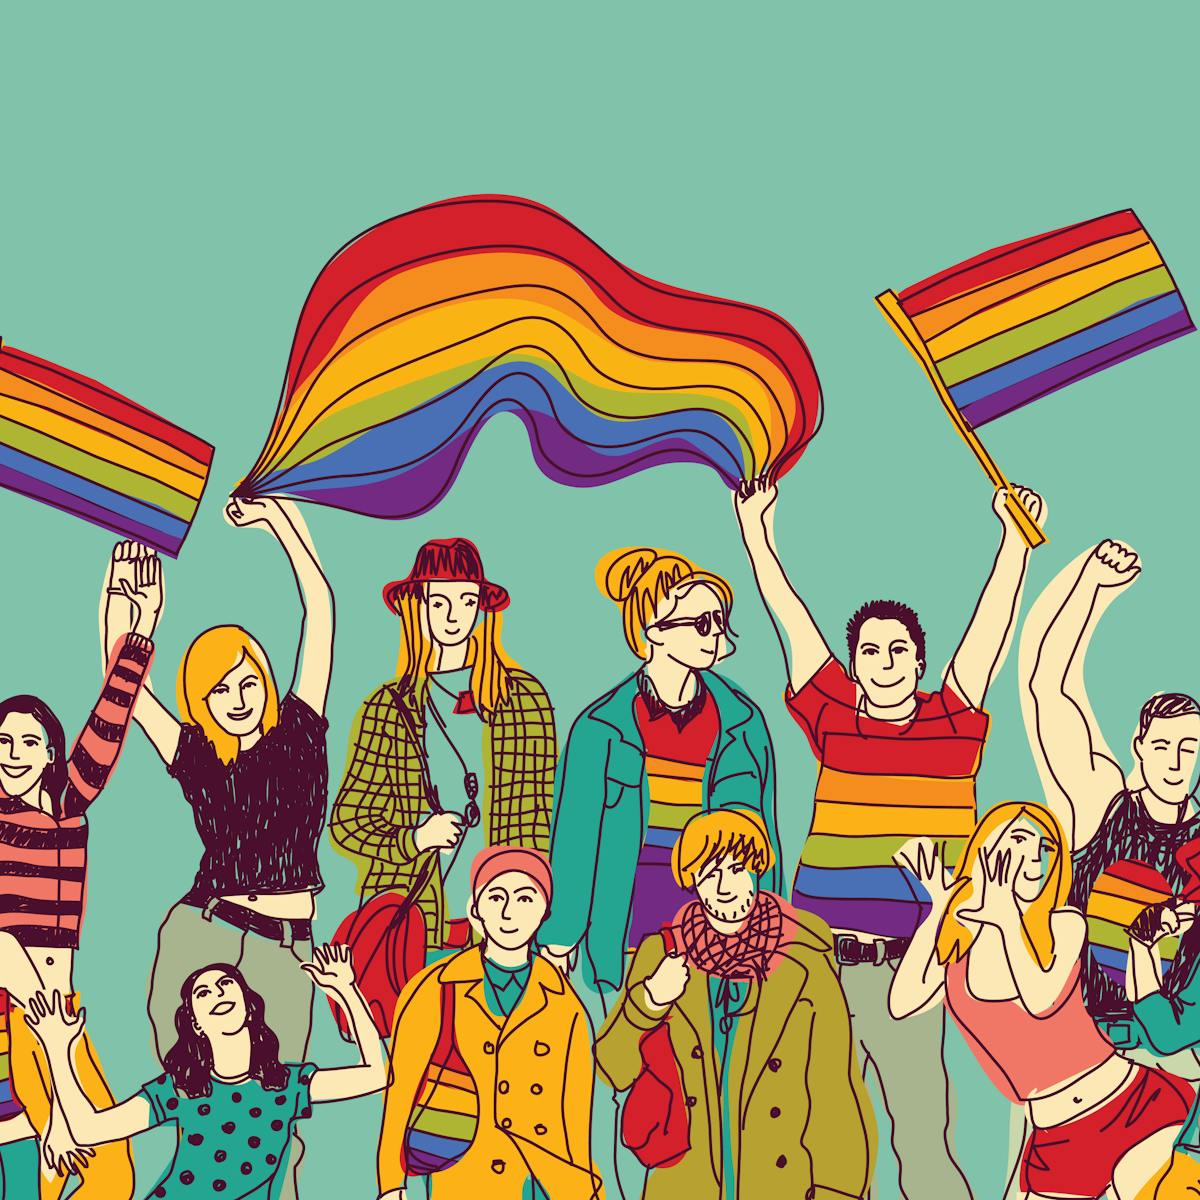 Why LGBTQ inclusivity still matters in higher education